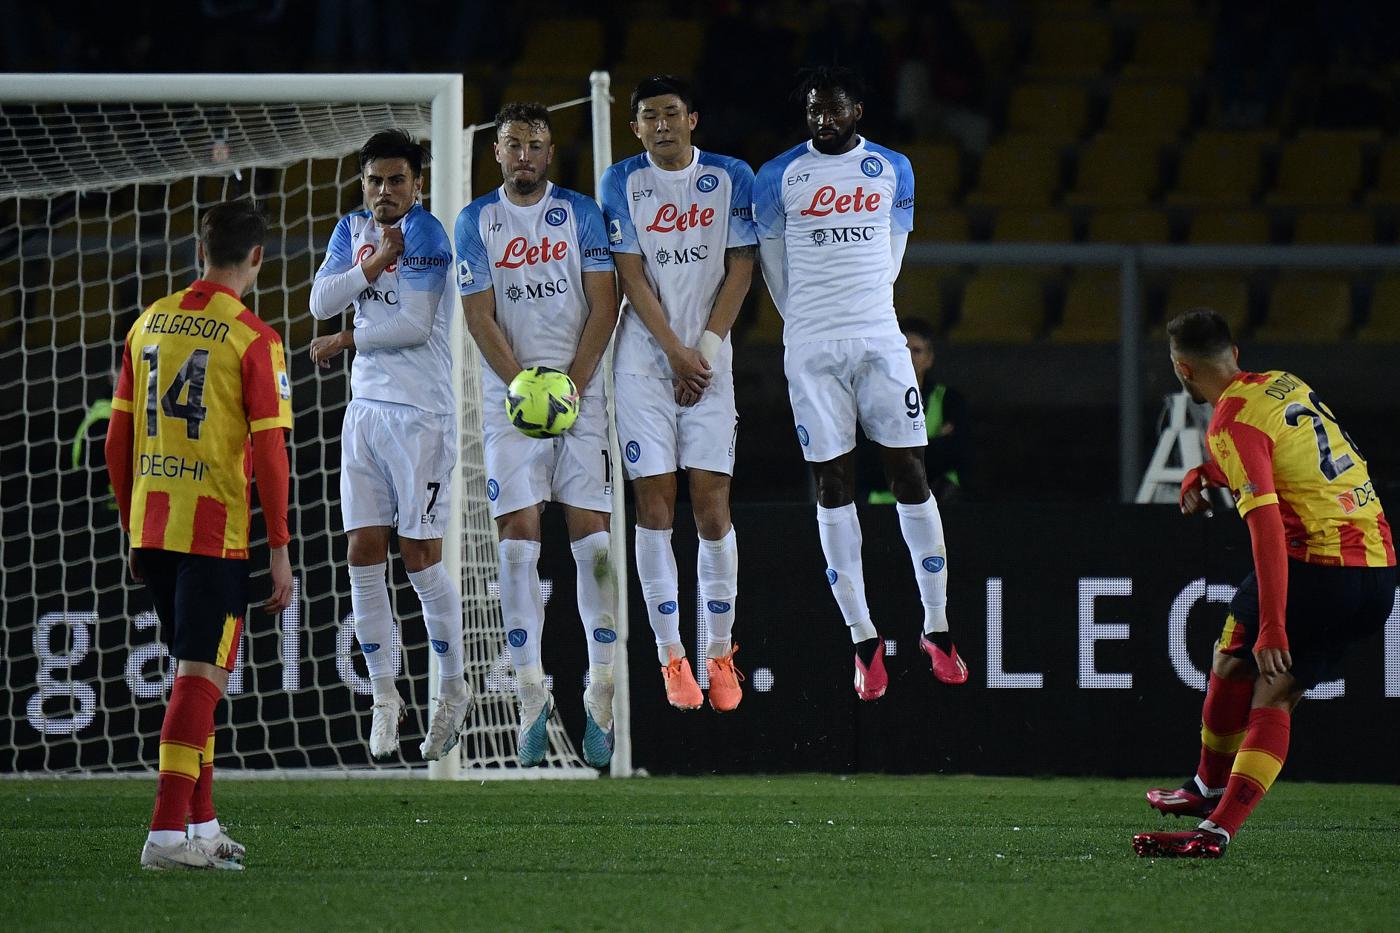 Lecce - Napoli - 1:2. Italian Championship, round of 29. Match review, statistics.